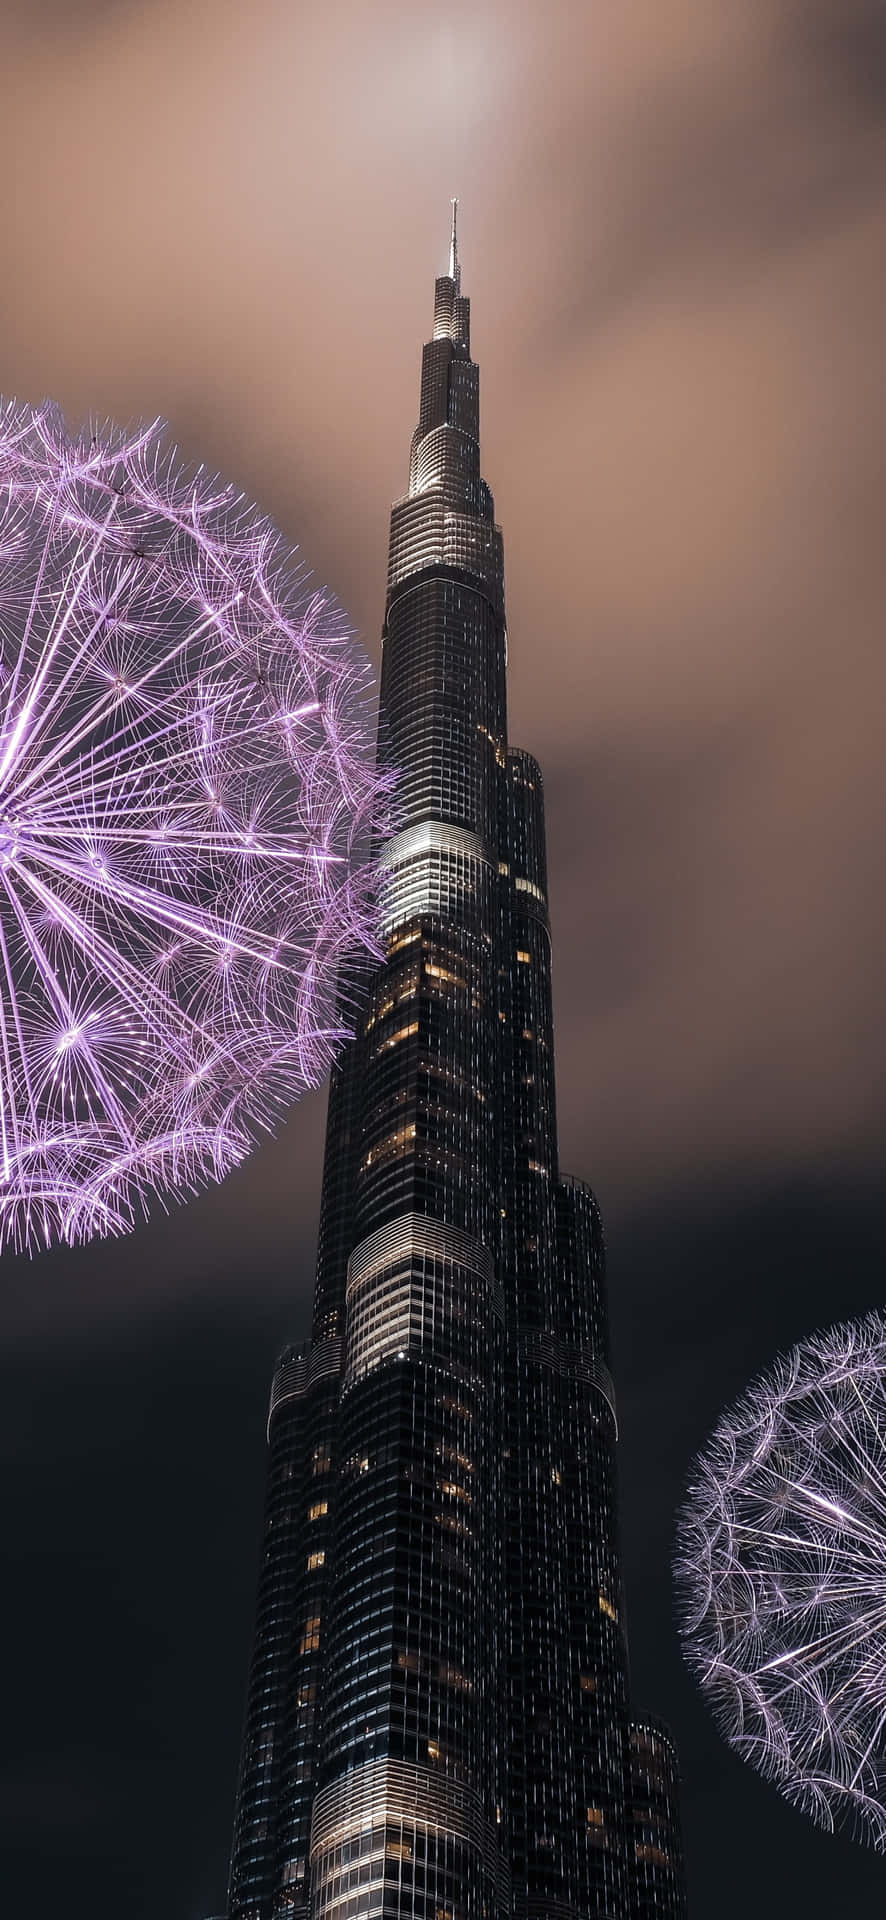 Burj Khalifa Nighttime Dandelion Fireworks Wallpaper